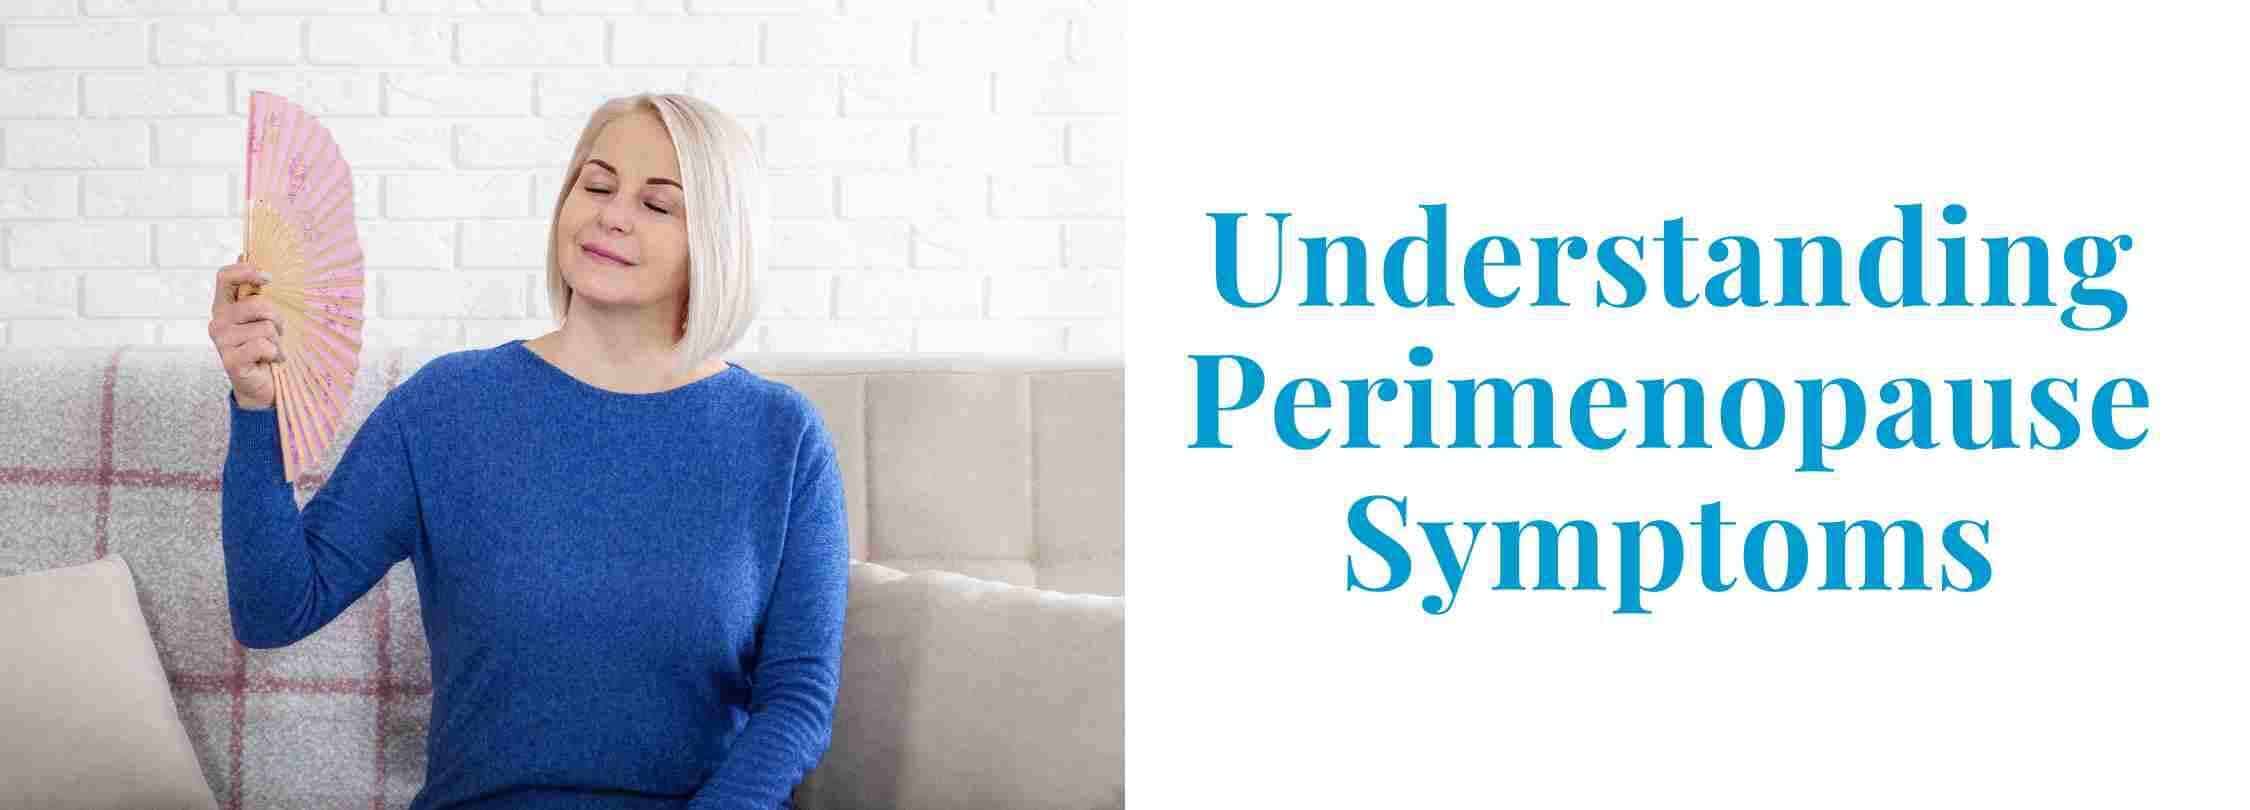 A Comprehensive Guide To Perimenopause Symptoms